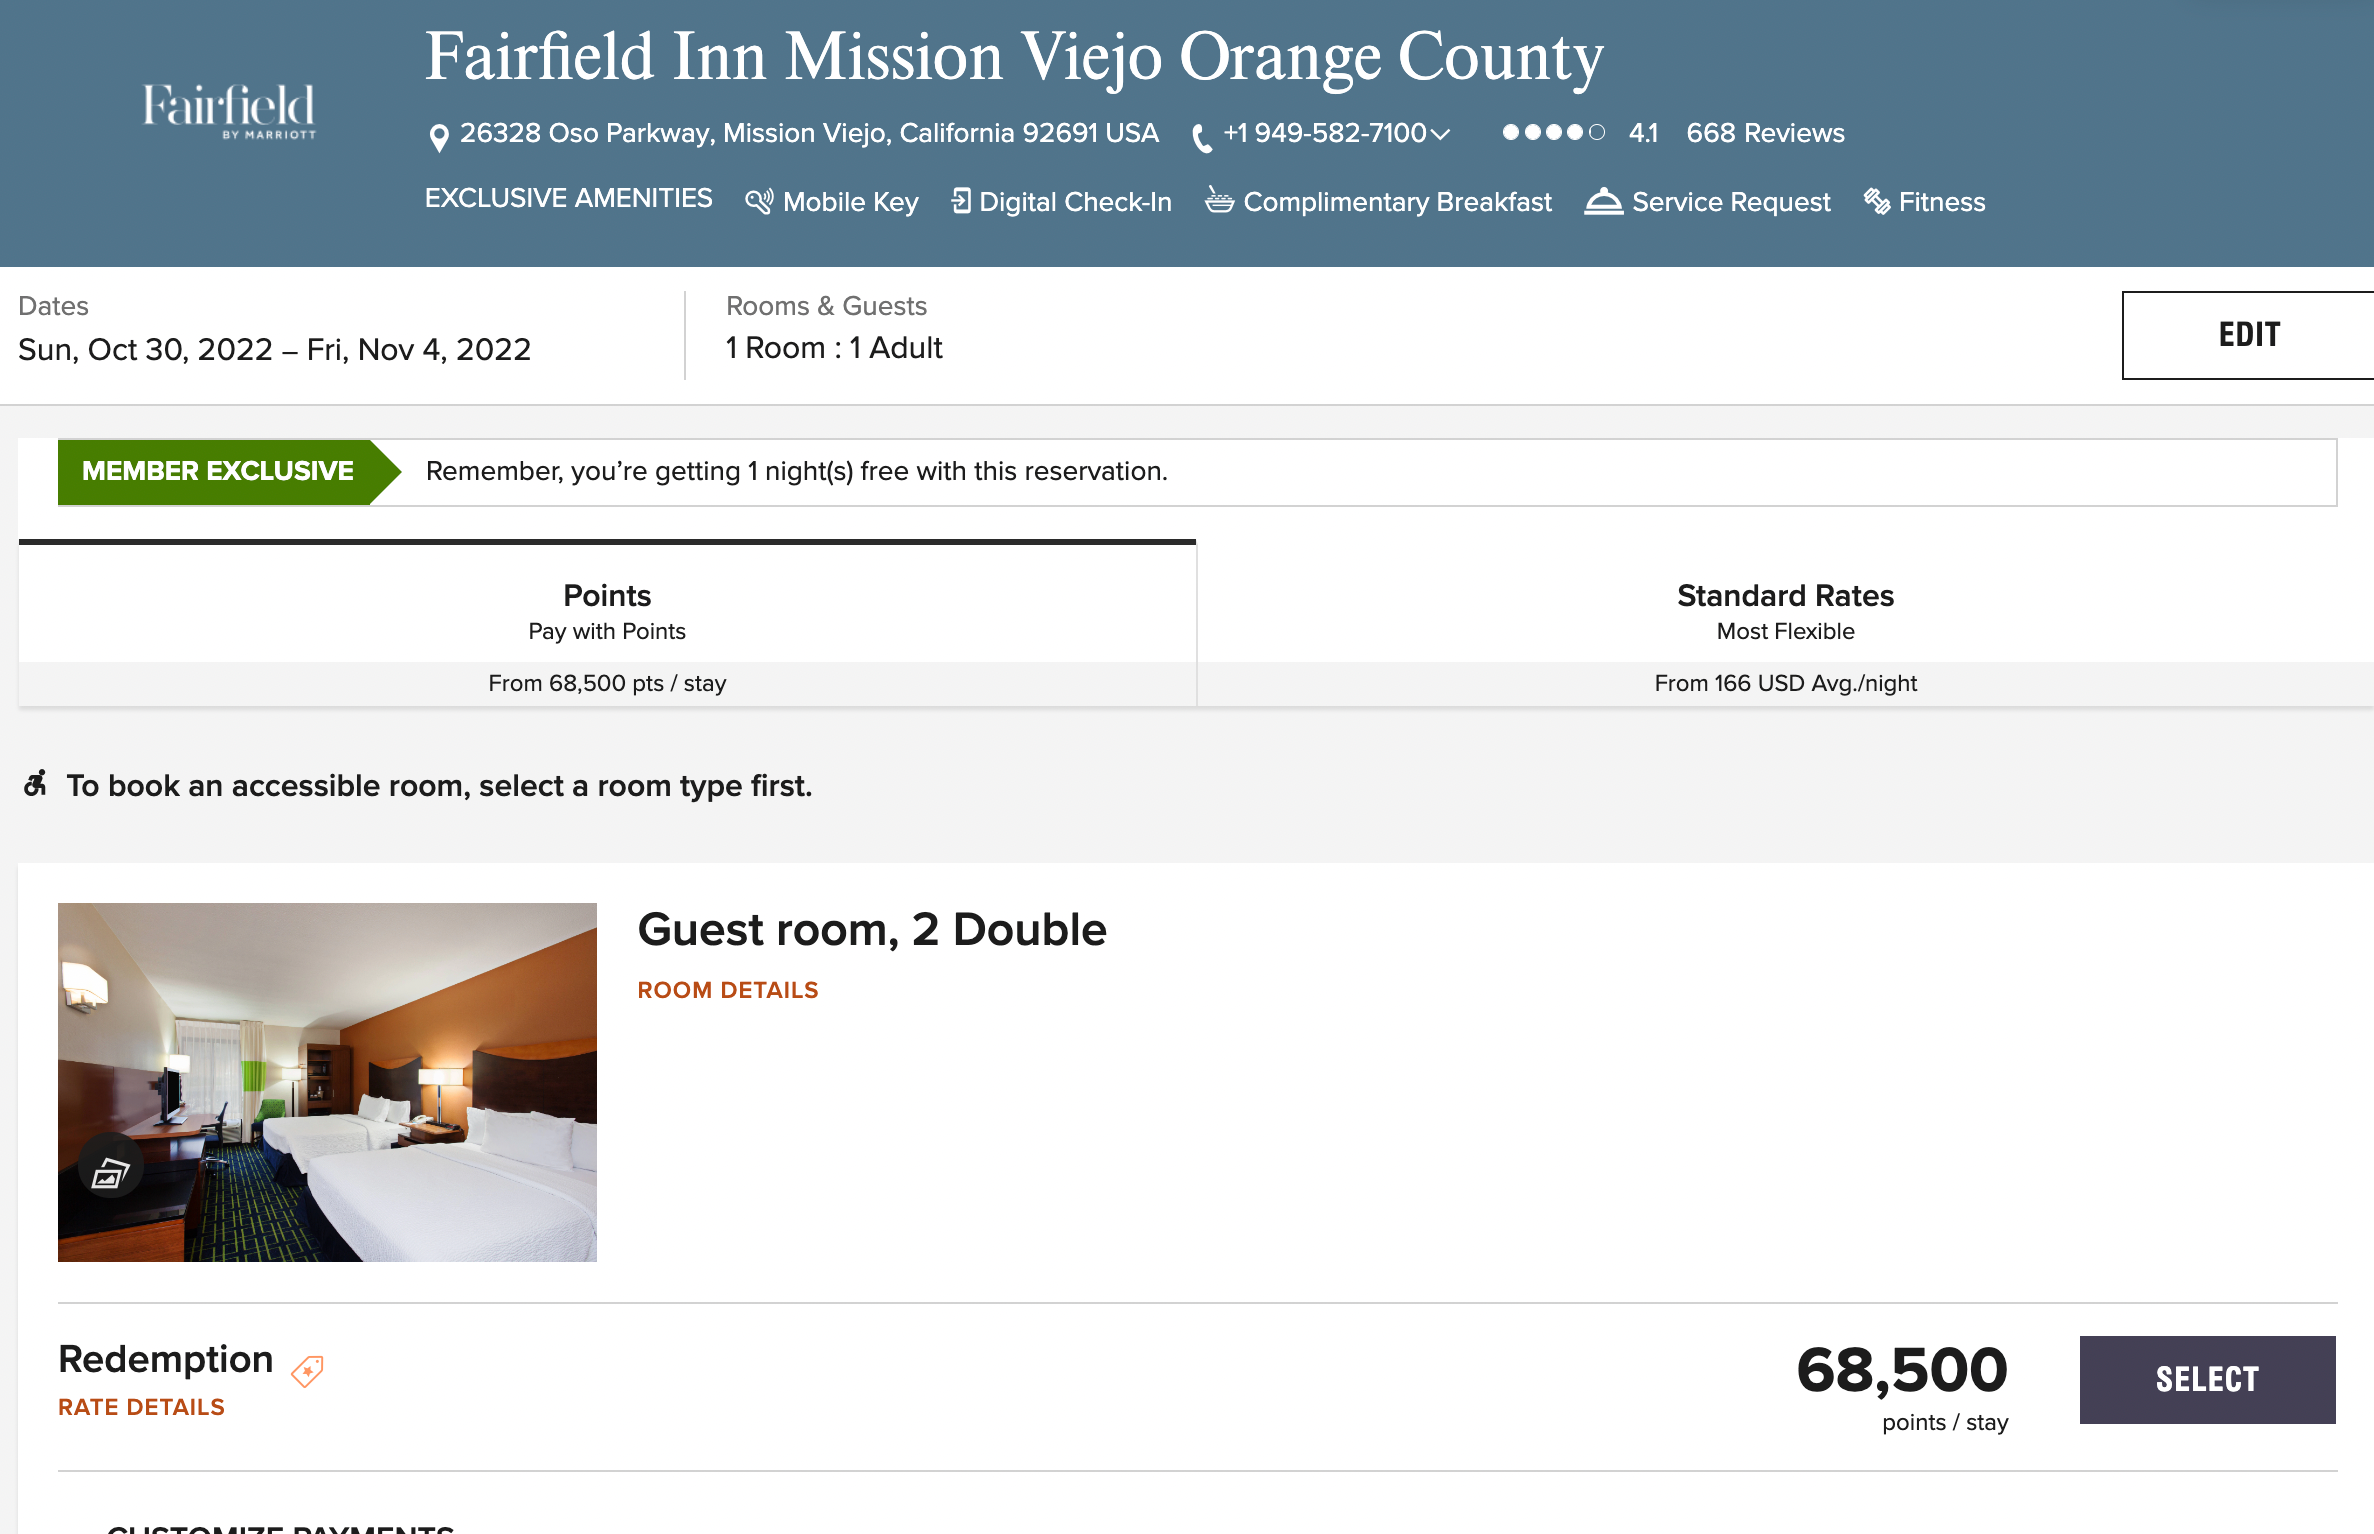 5 nights at this Fairfield near Laguna Beach costs 68,500 points